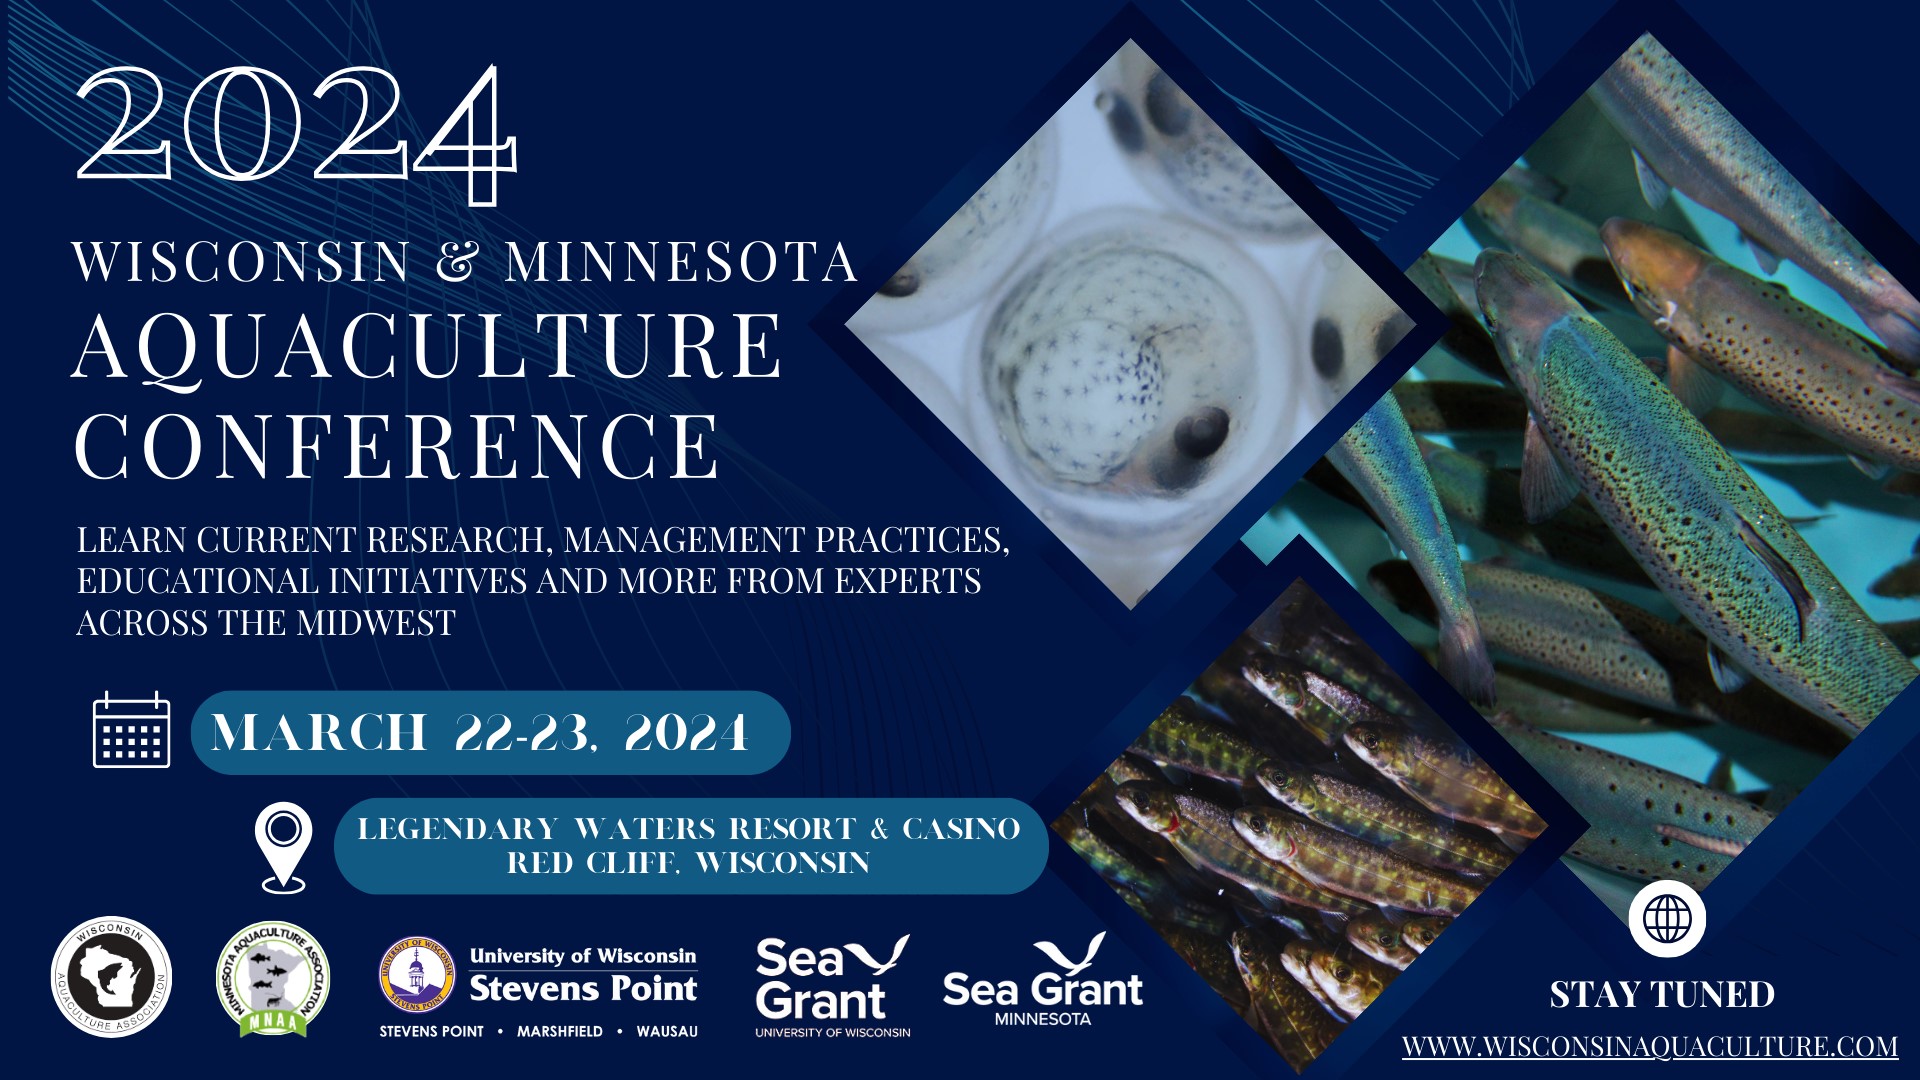 2024 Wisconsin & Minnesota Aquaculture conference flier